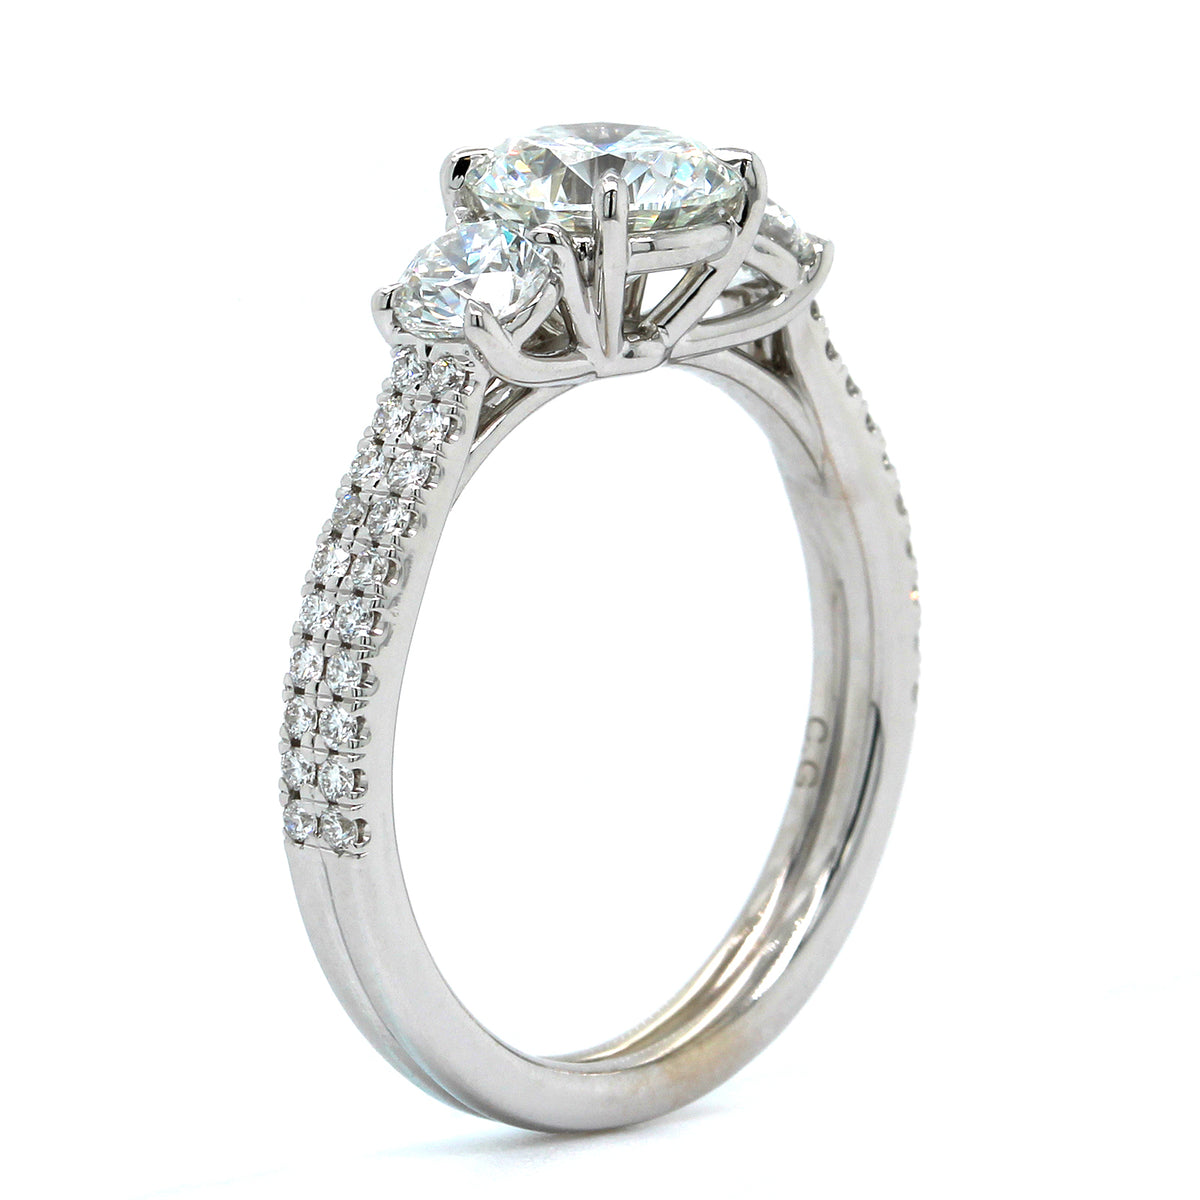 18K White Gold 3 Stone Diamond Engagement Ring